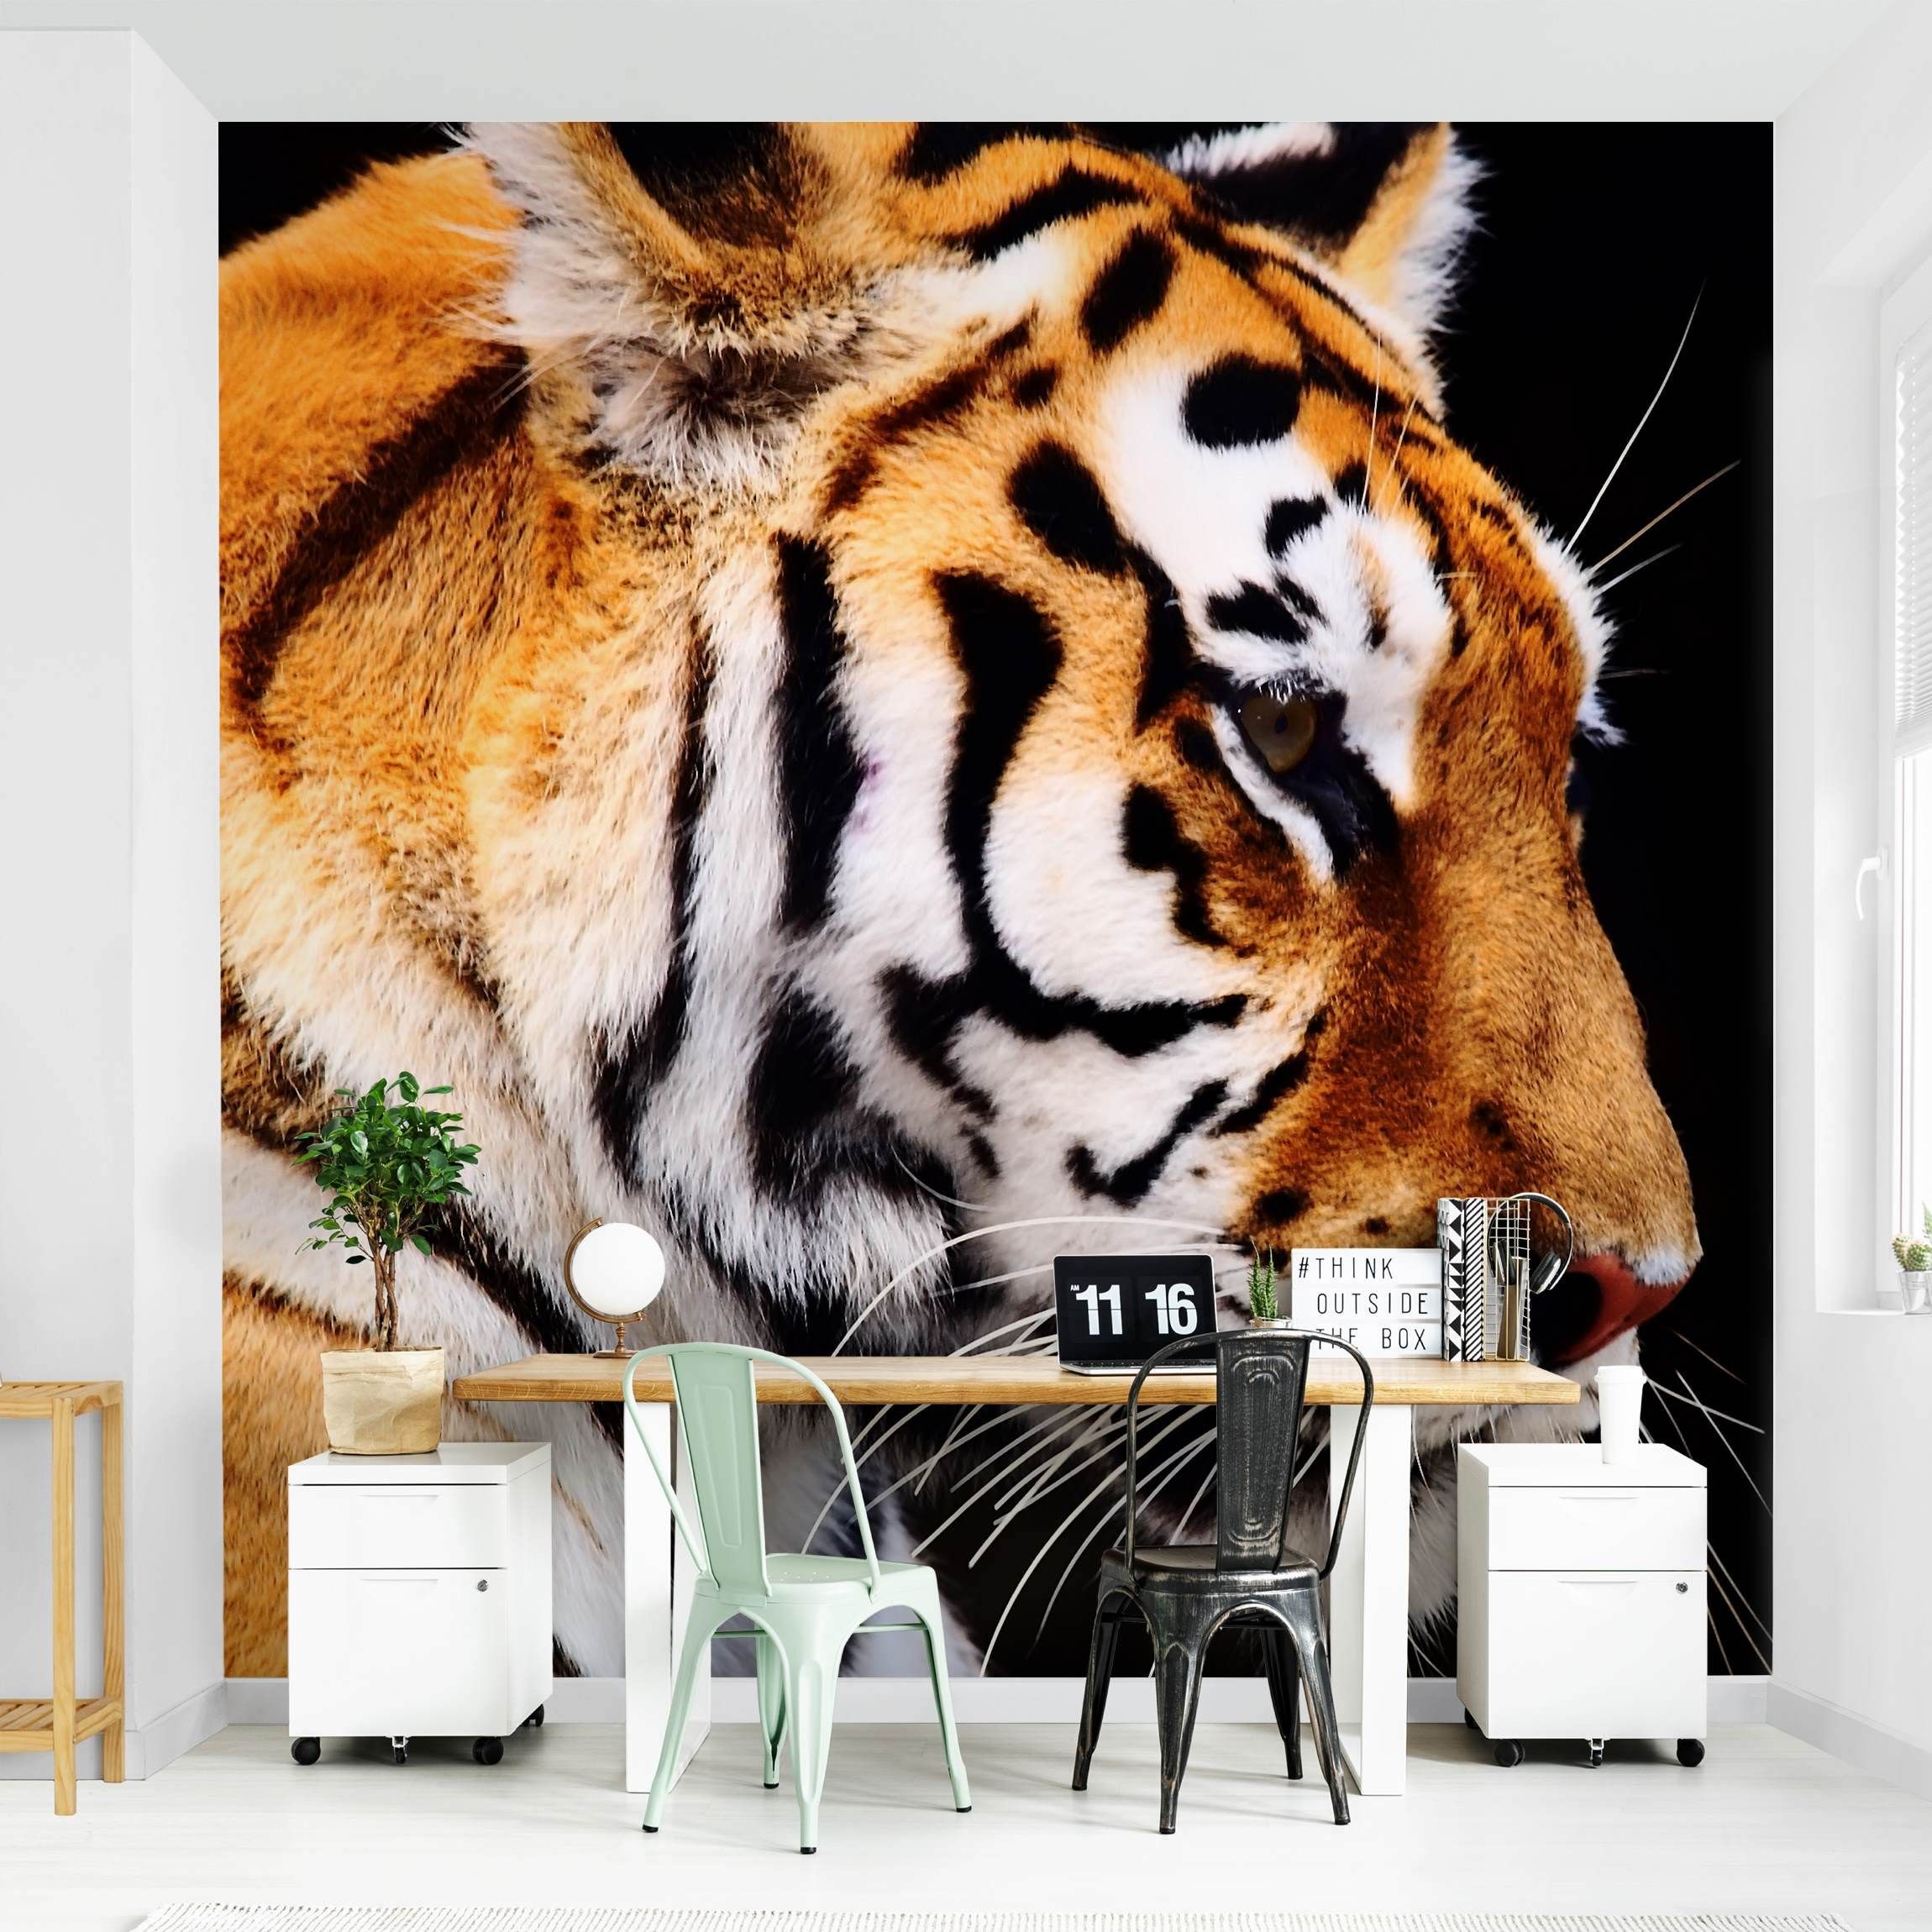 Tiger Schönheit Fototapete nach Maß | Vliestapete & selbstklebend | WALLART